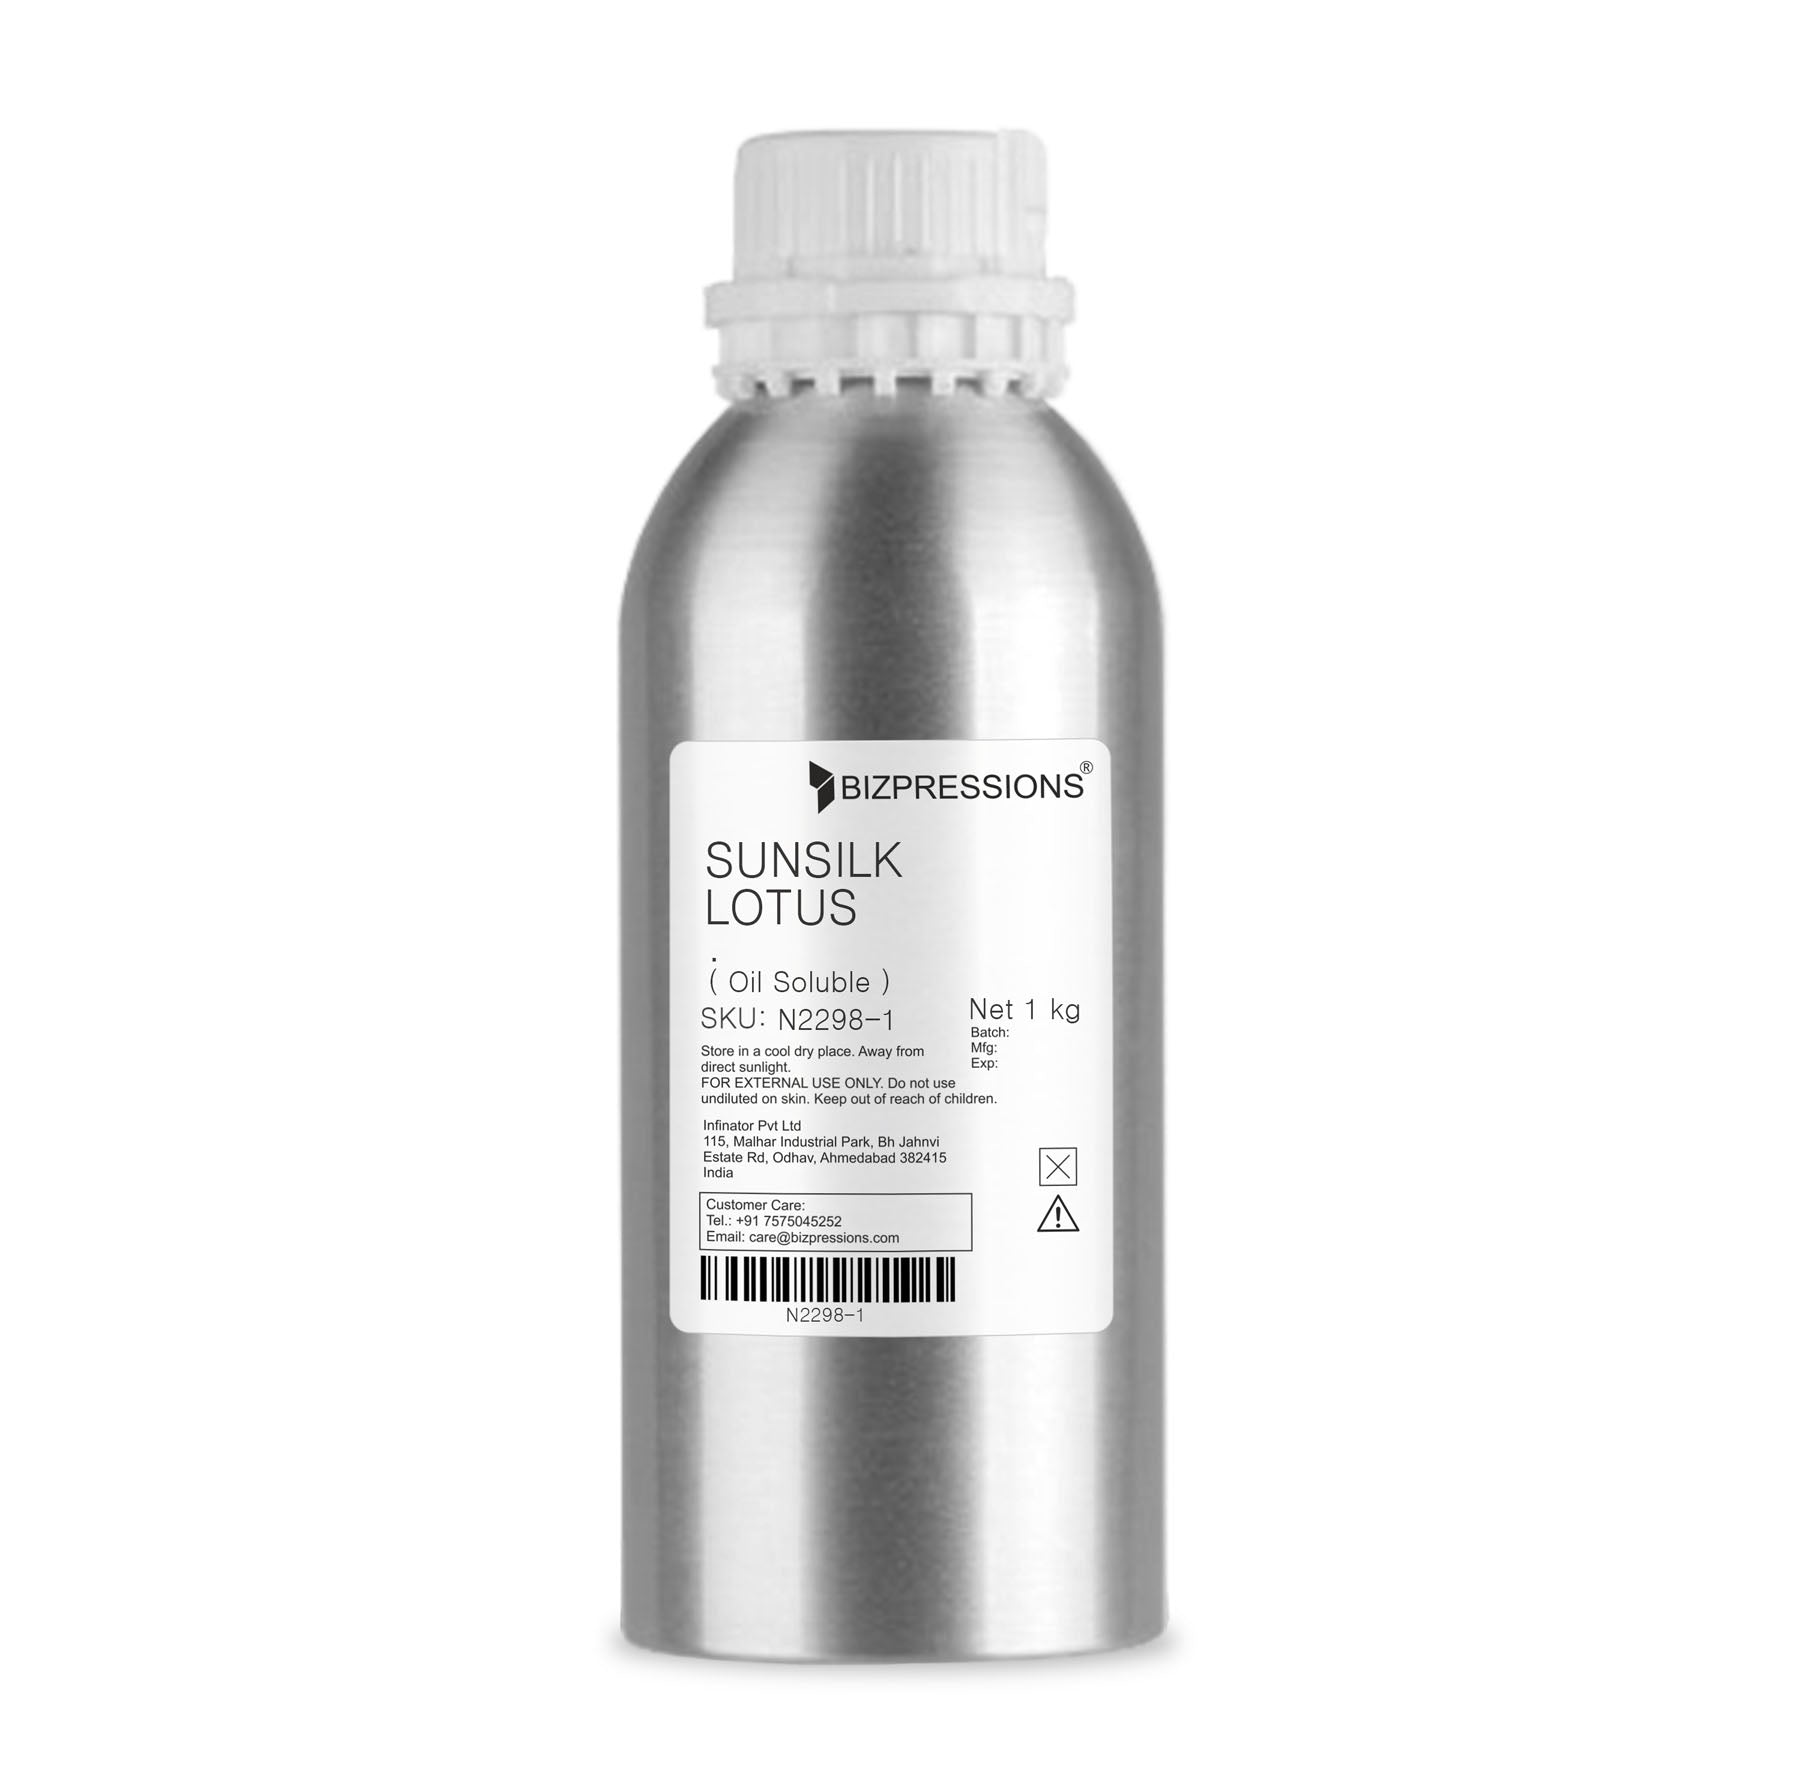 SUNSILK LOTUS - Fragrance ( Oil Soluble ) - 1 kg